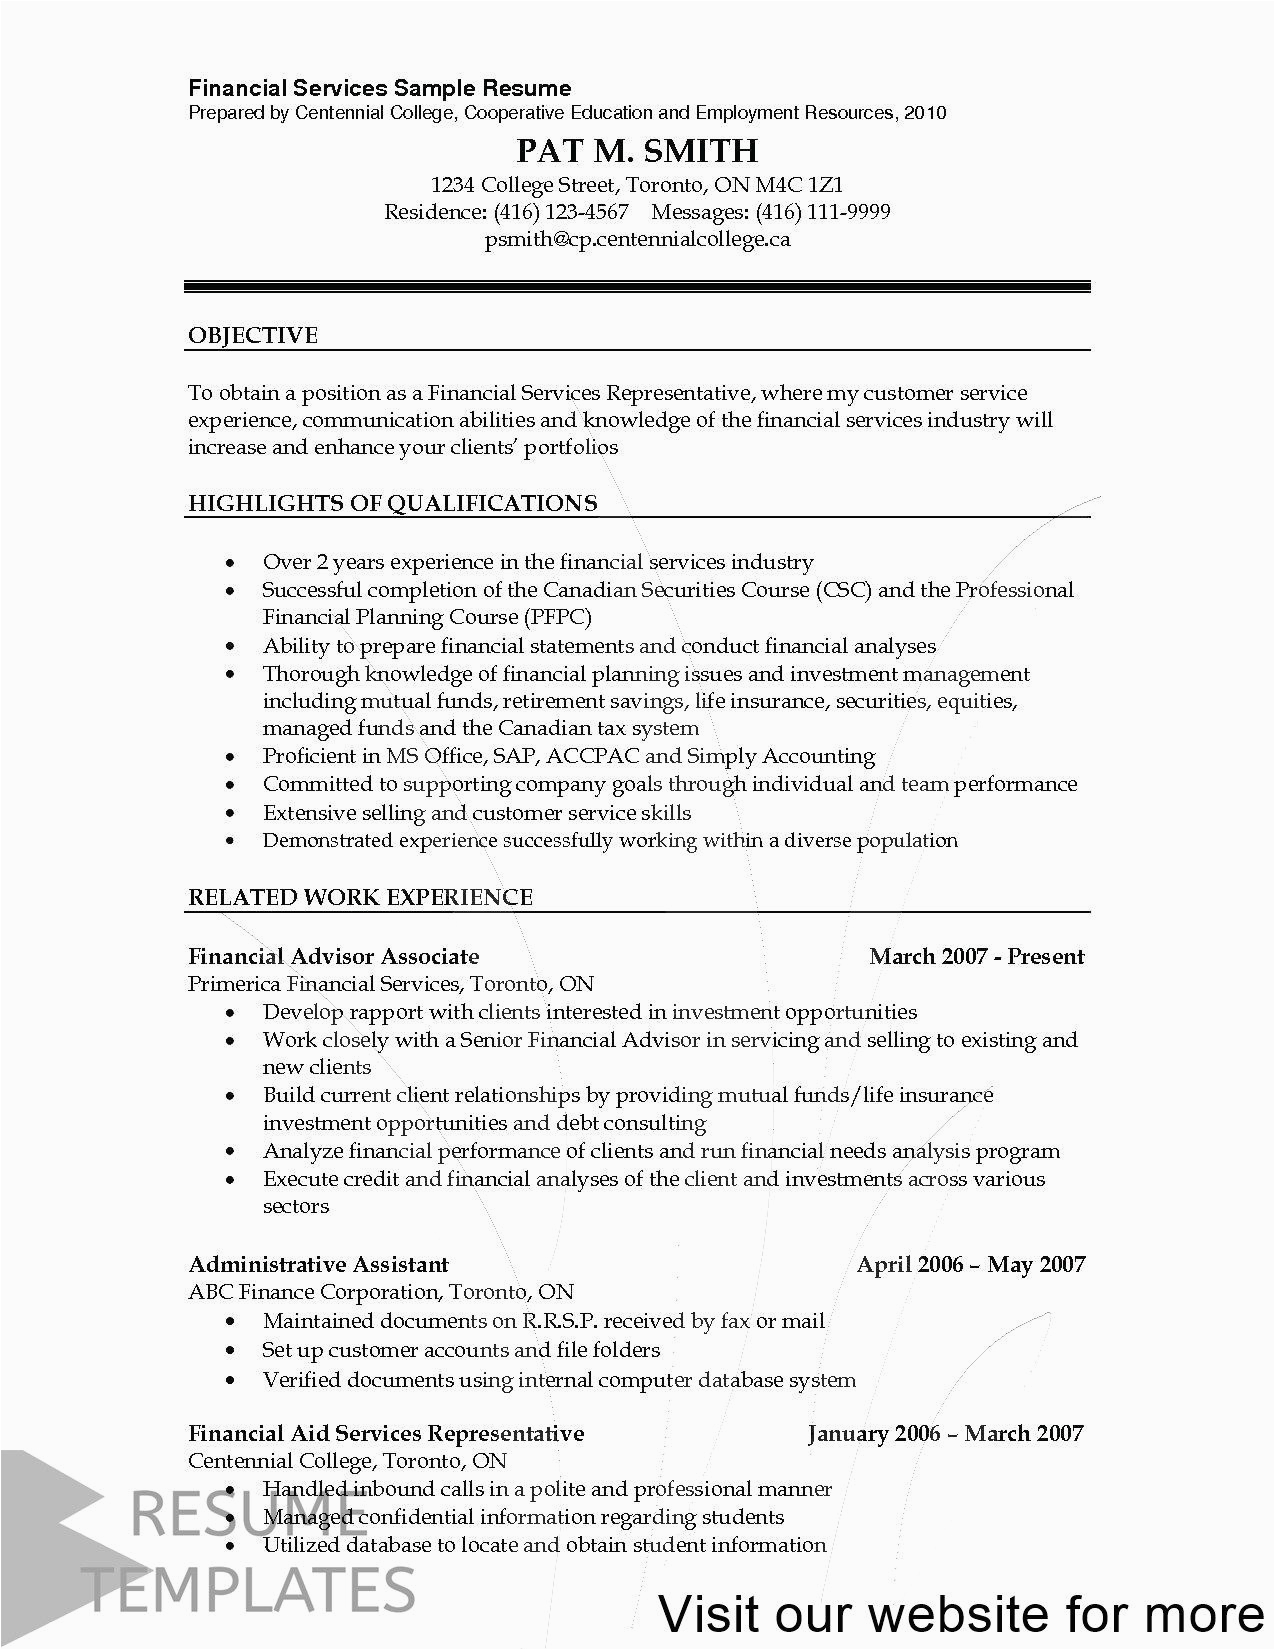 resume sample for job seekers